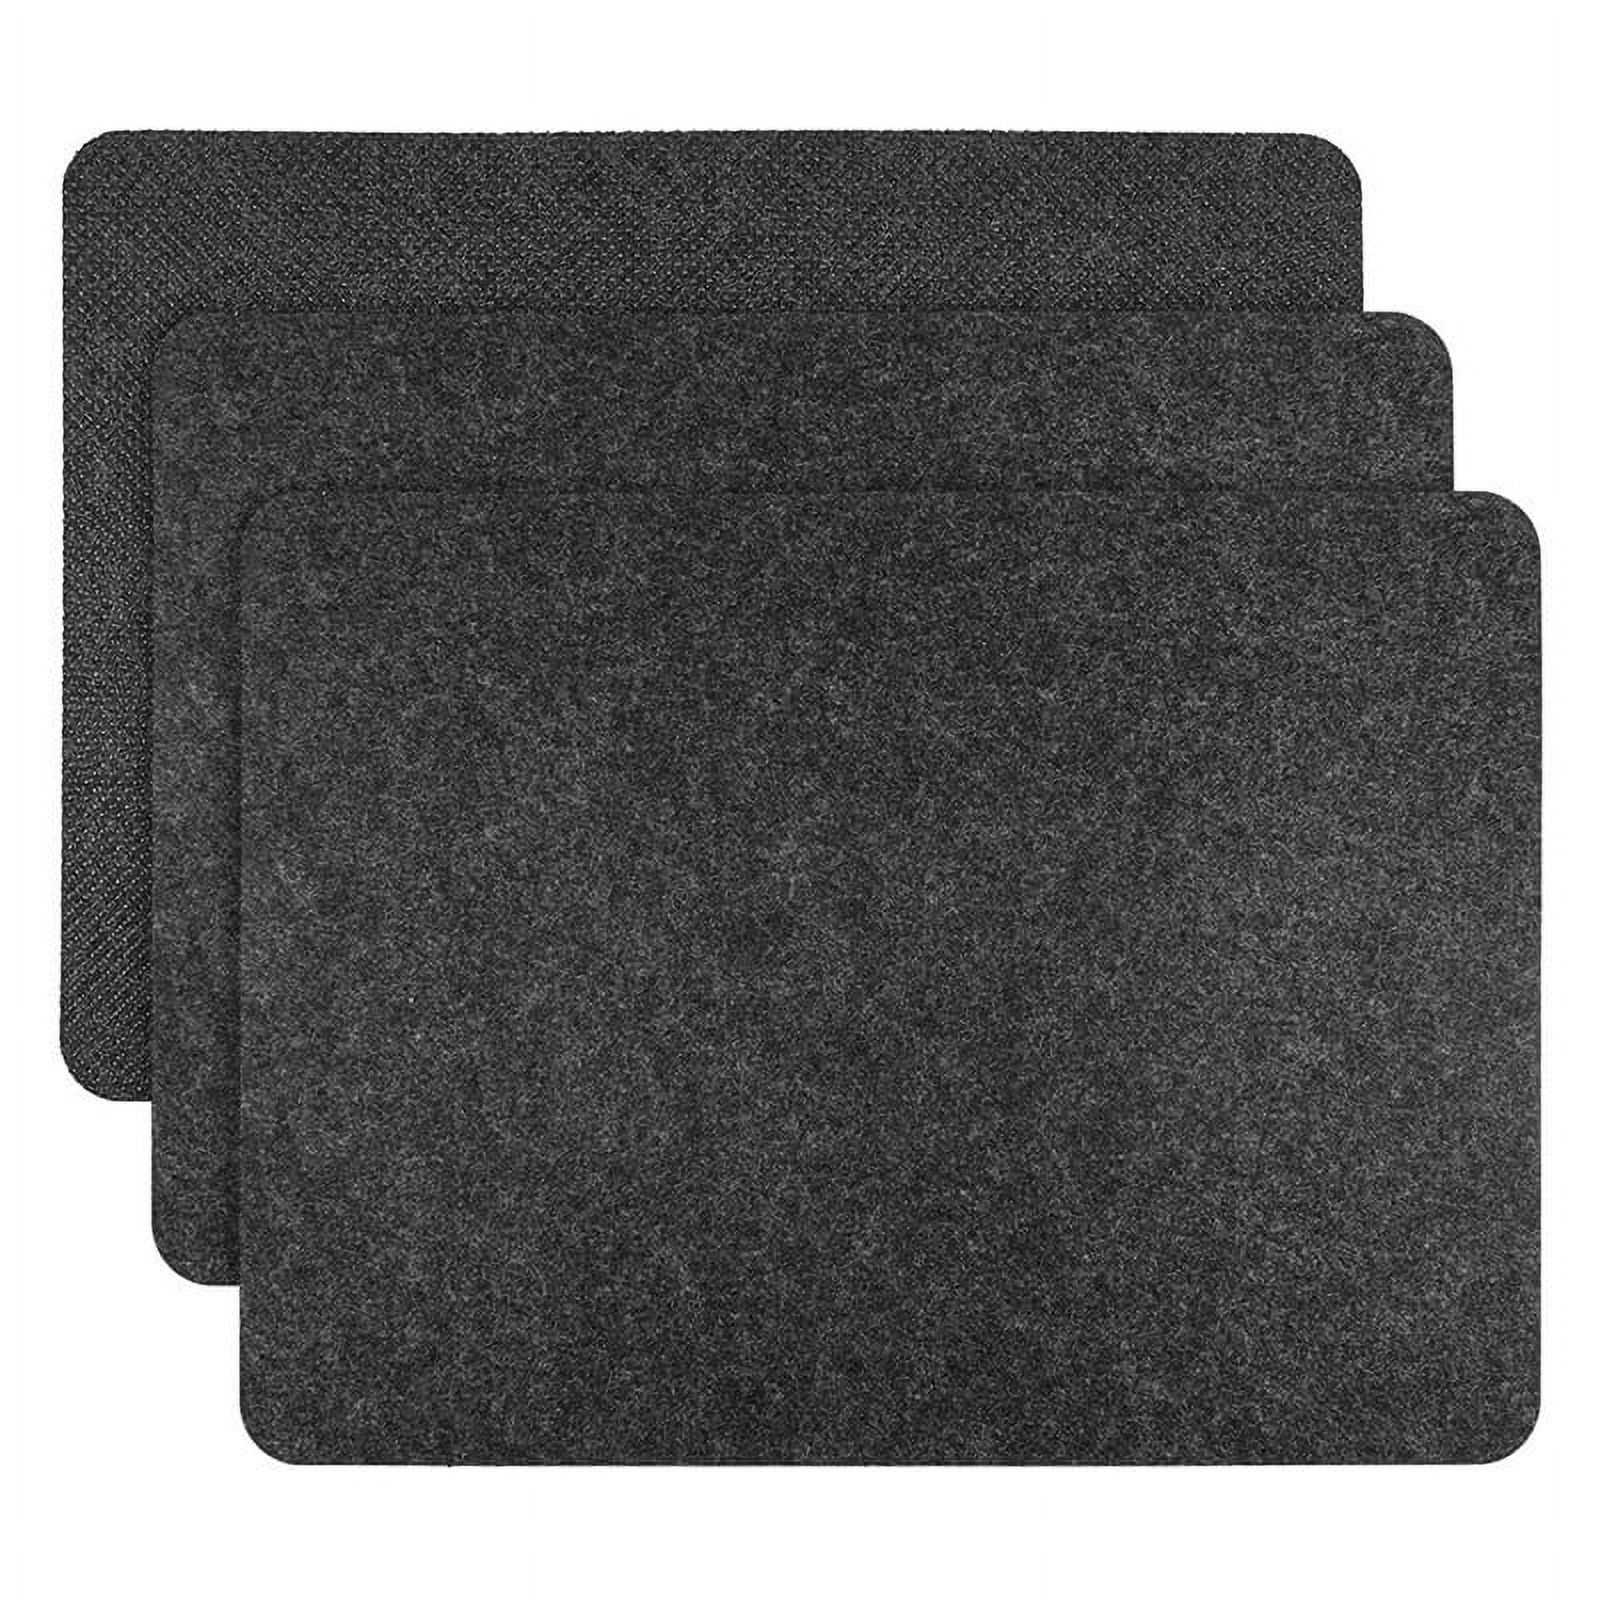 3 Pieces Heat Resistant Mat for Air Fryer Countertop Heat Protector Non-Slip Heat Proof Mat Kitchen Hot Pads for Blender, Size: 30 x 45cm, Black